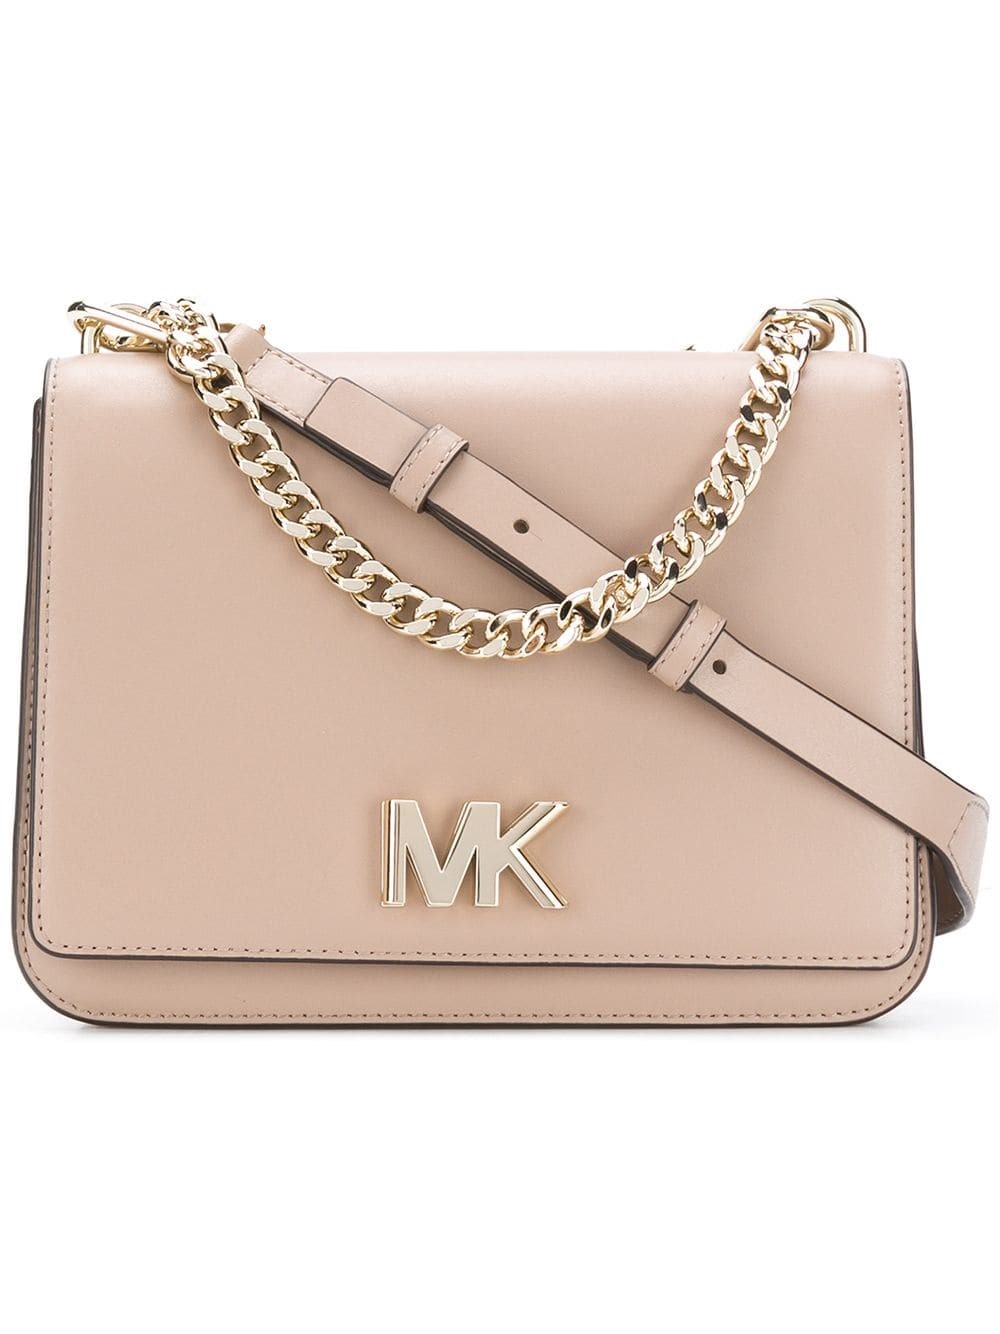 mk logo bag